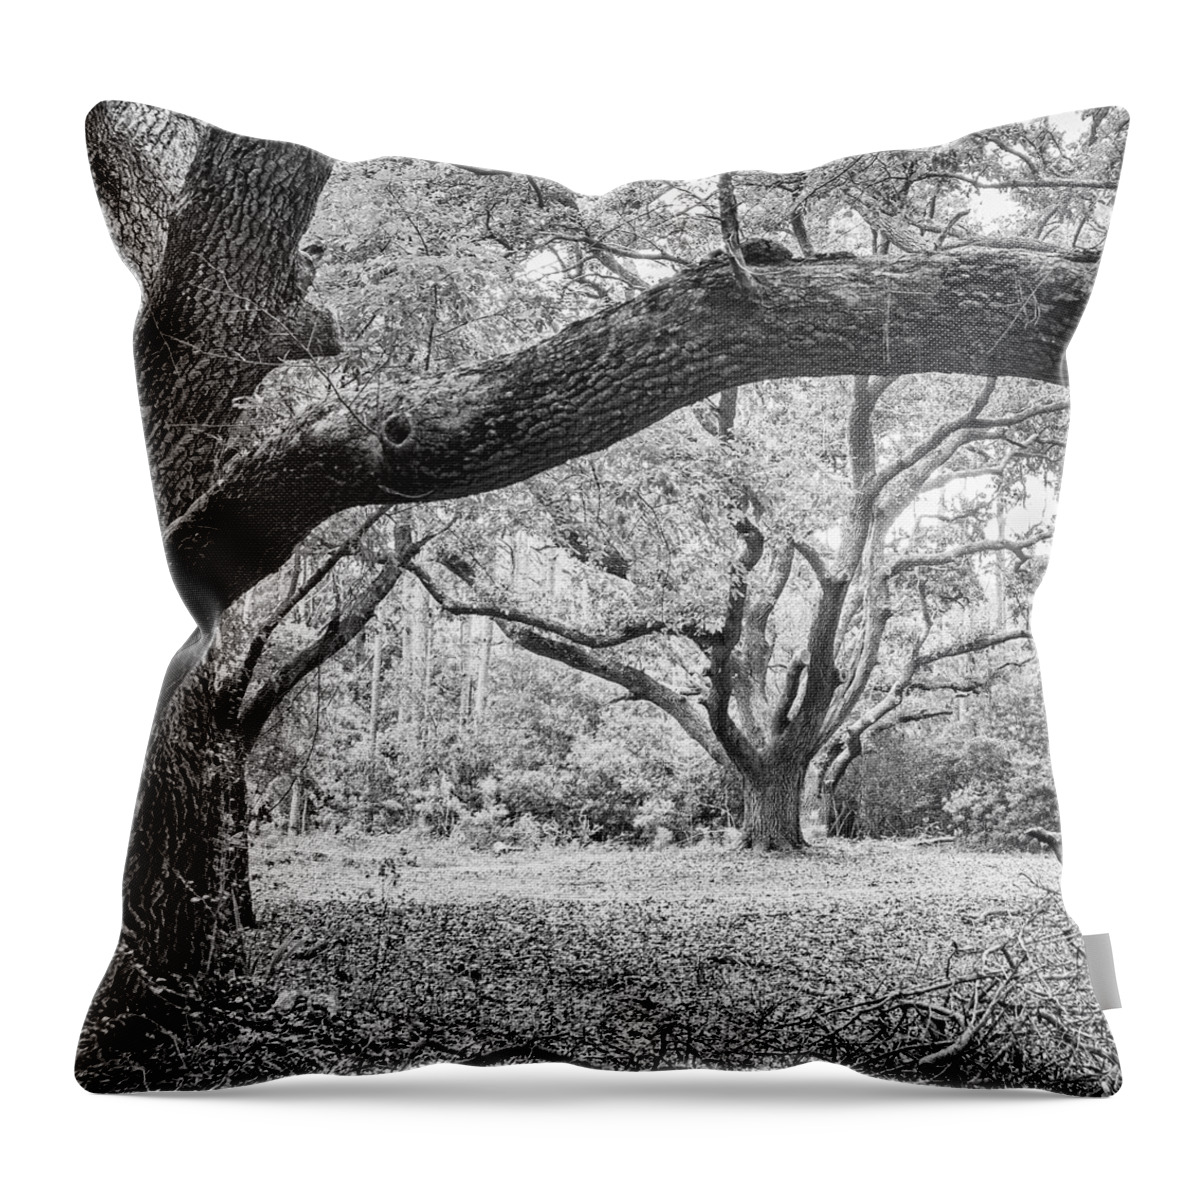 Live Oak Throw Pillow featuring the photograph The Live Oaks of Hammocks Beach State Park by Bob Decker